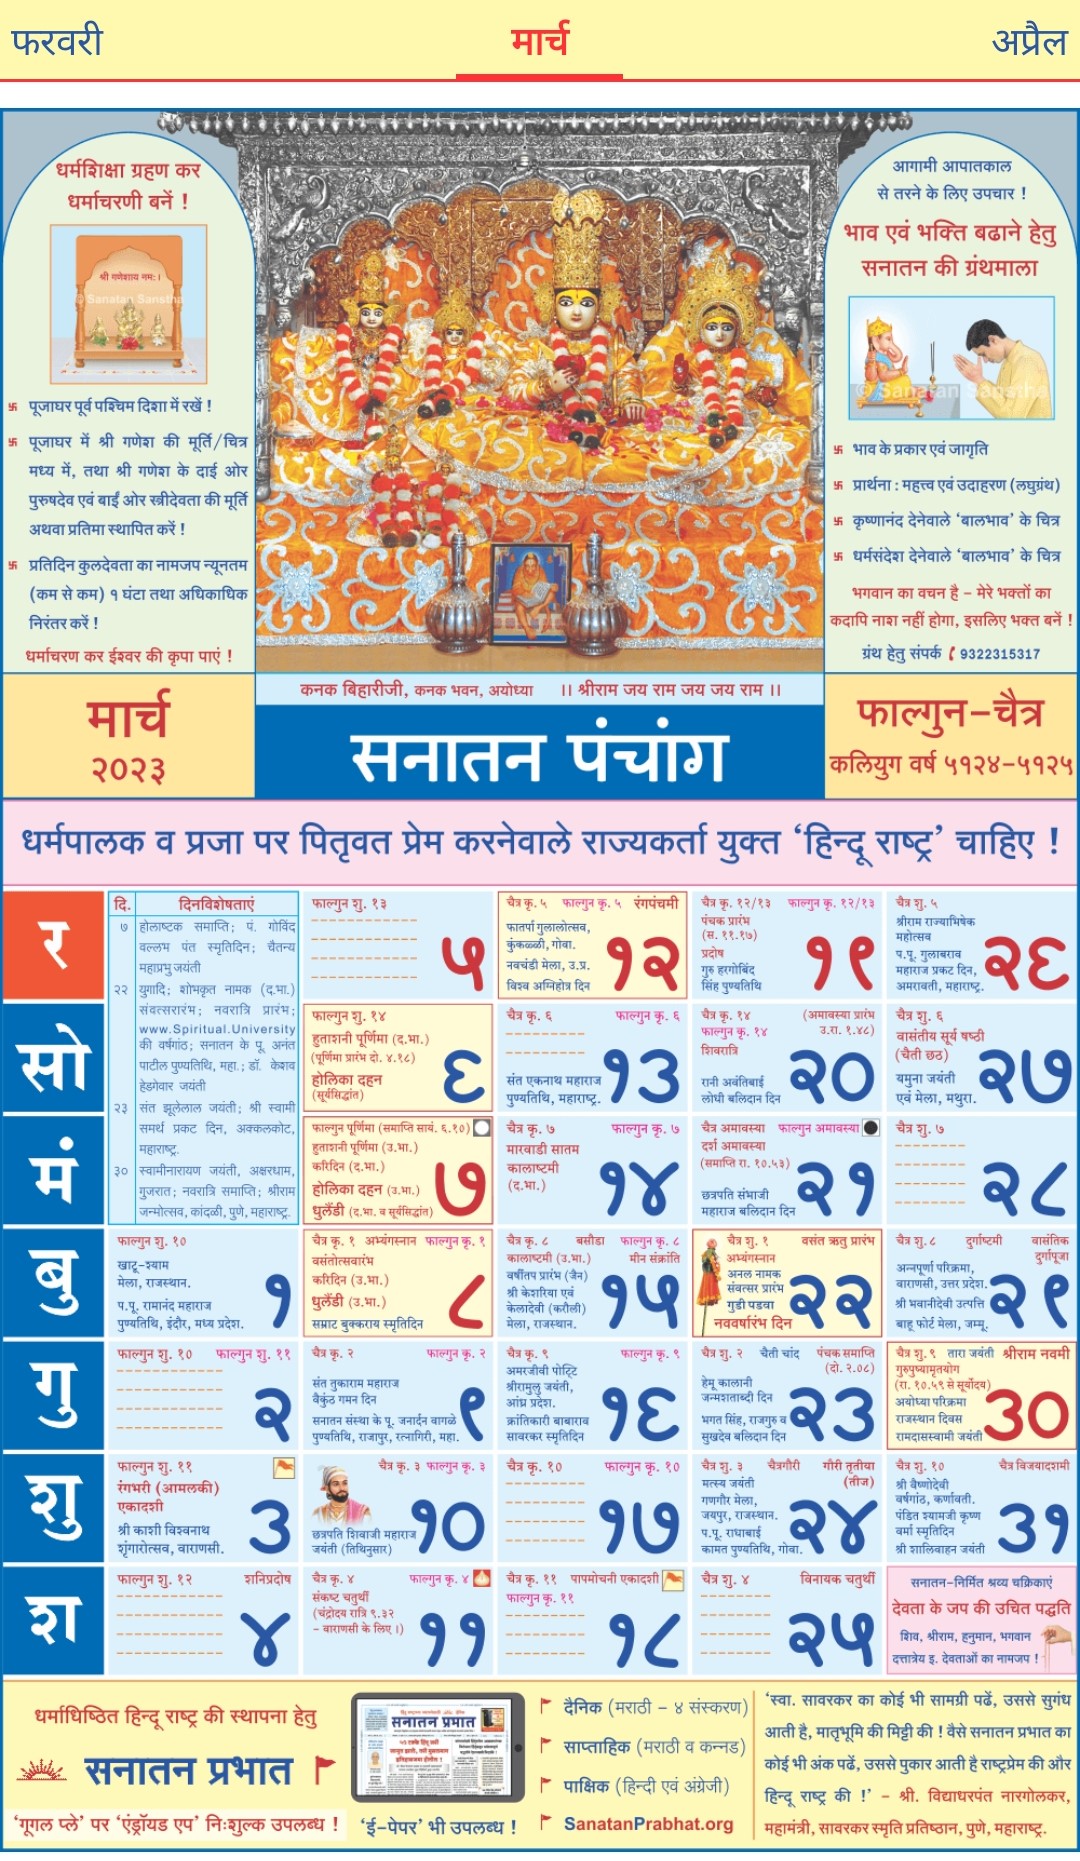 Sanatan Panchang 2023 Pdf, सनातन पंचांग २०२३, Sanatan Calendar in Hindi